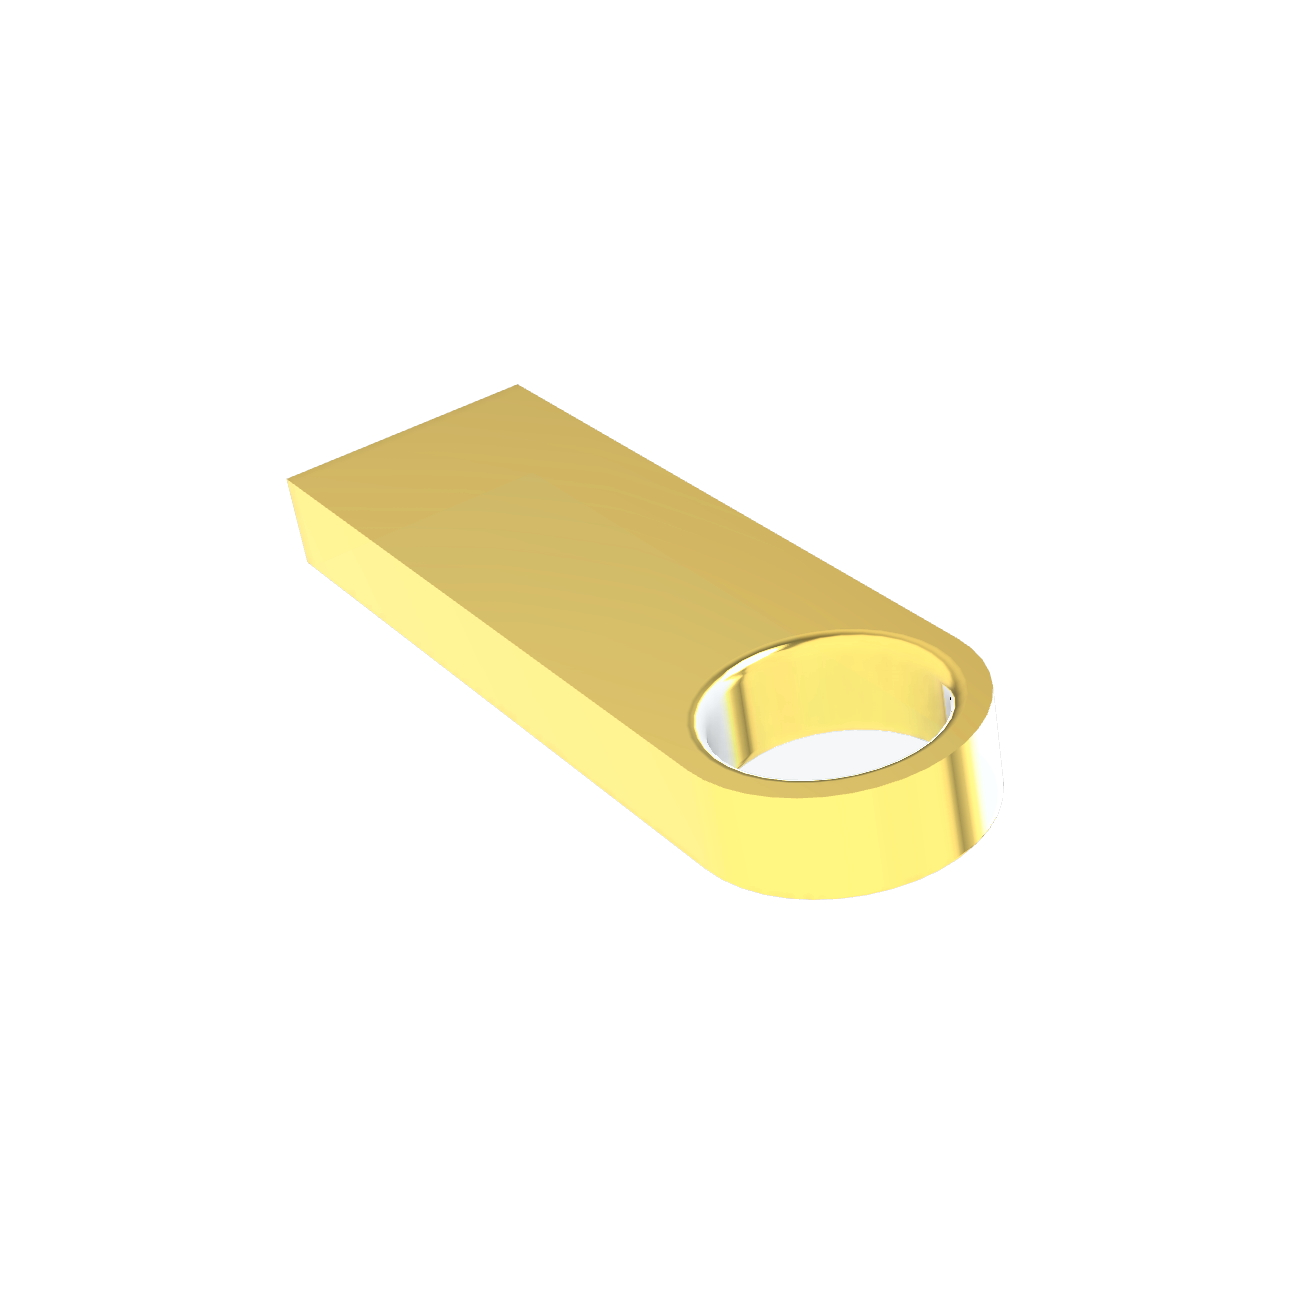 USB GERMANY ® 128 (Gold, GB) SE09 USB-Stick